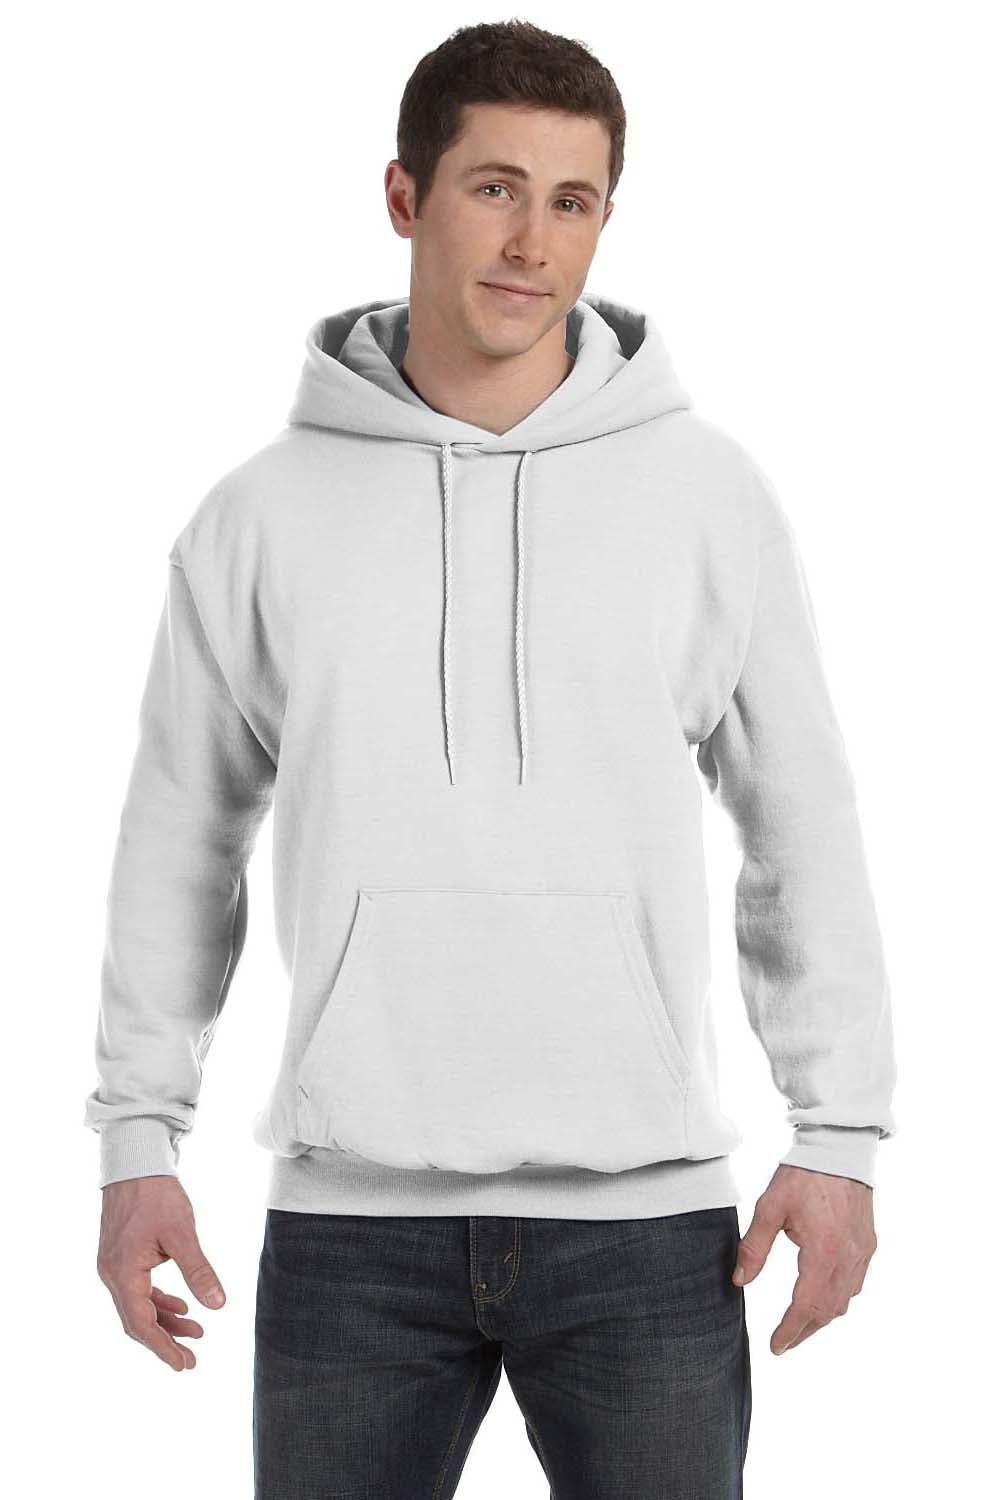 Hanes P170 Mens EcoSmart Print Pro XP Hooded Sweatshirt Hoodie White Front